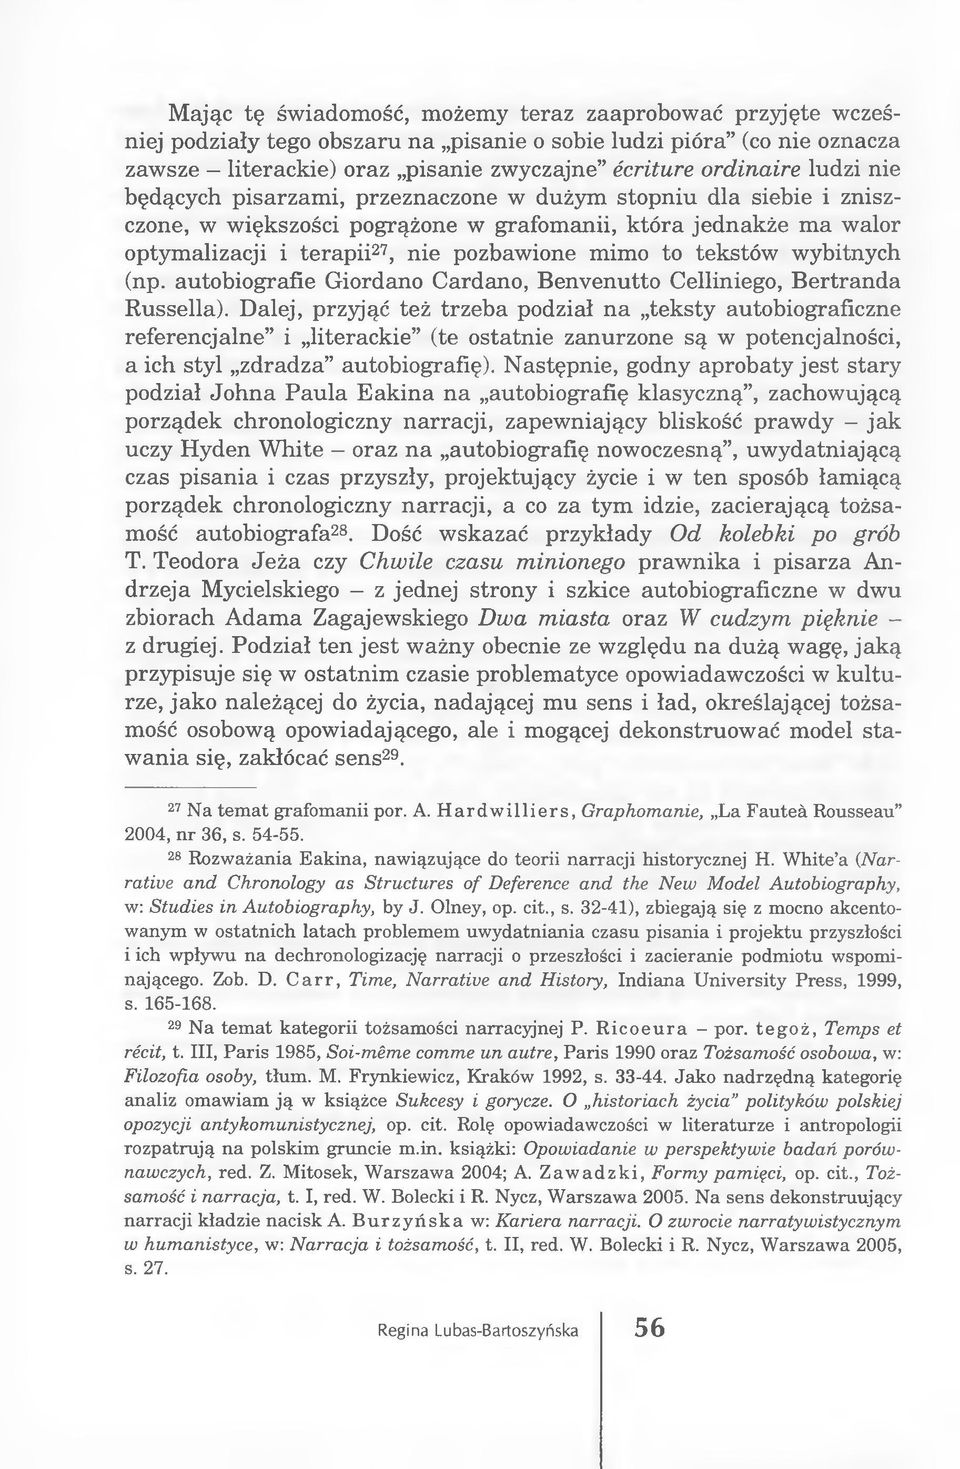 tekstów wybitnych (np. autobiografie Giordano Cardano, Benvenutto Celliniego, Bertranda Russella).